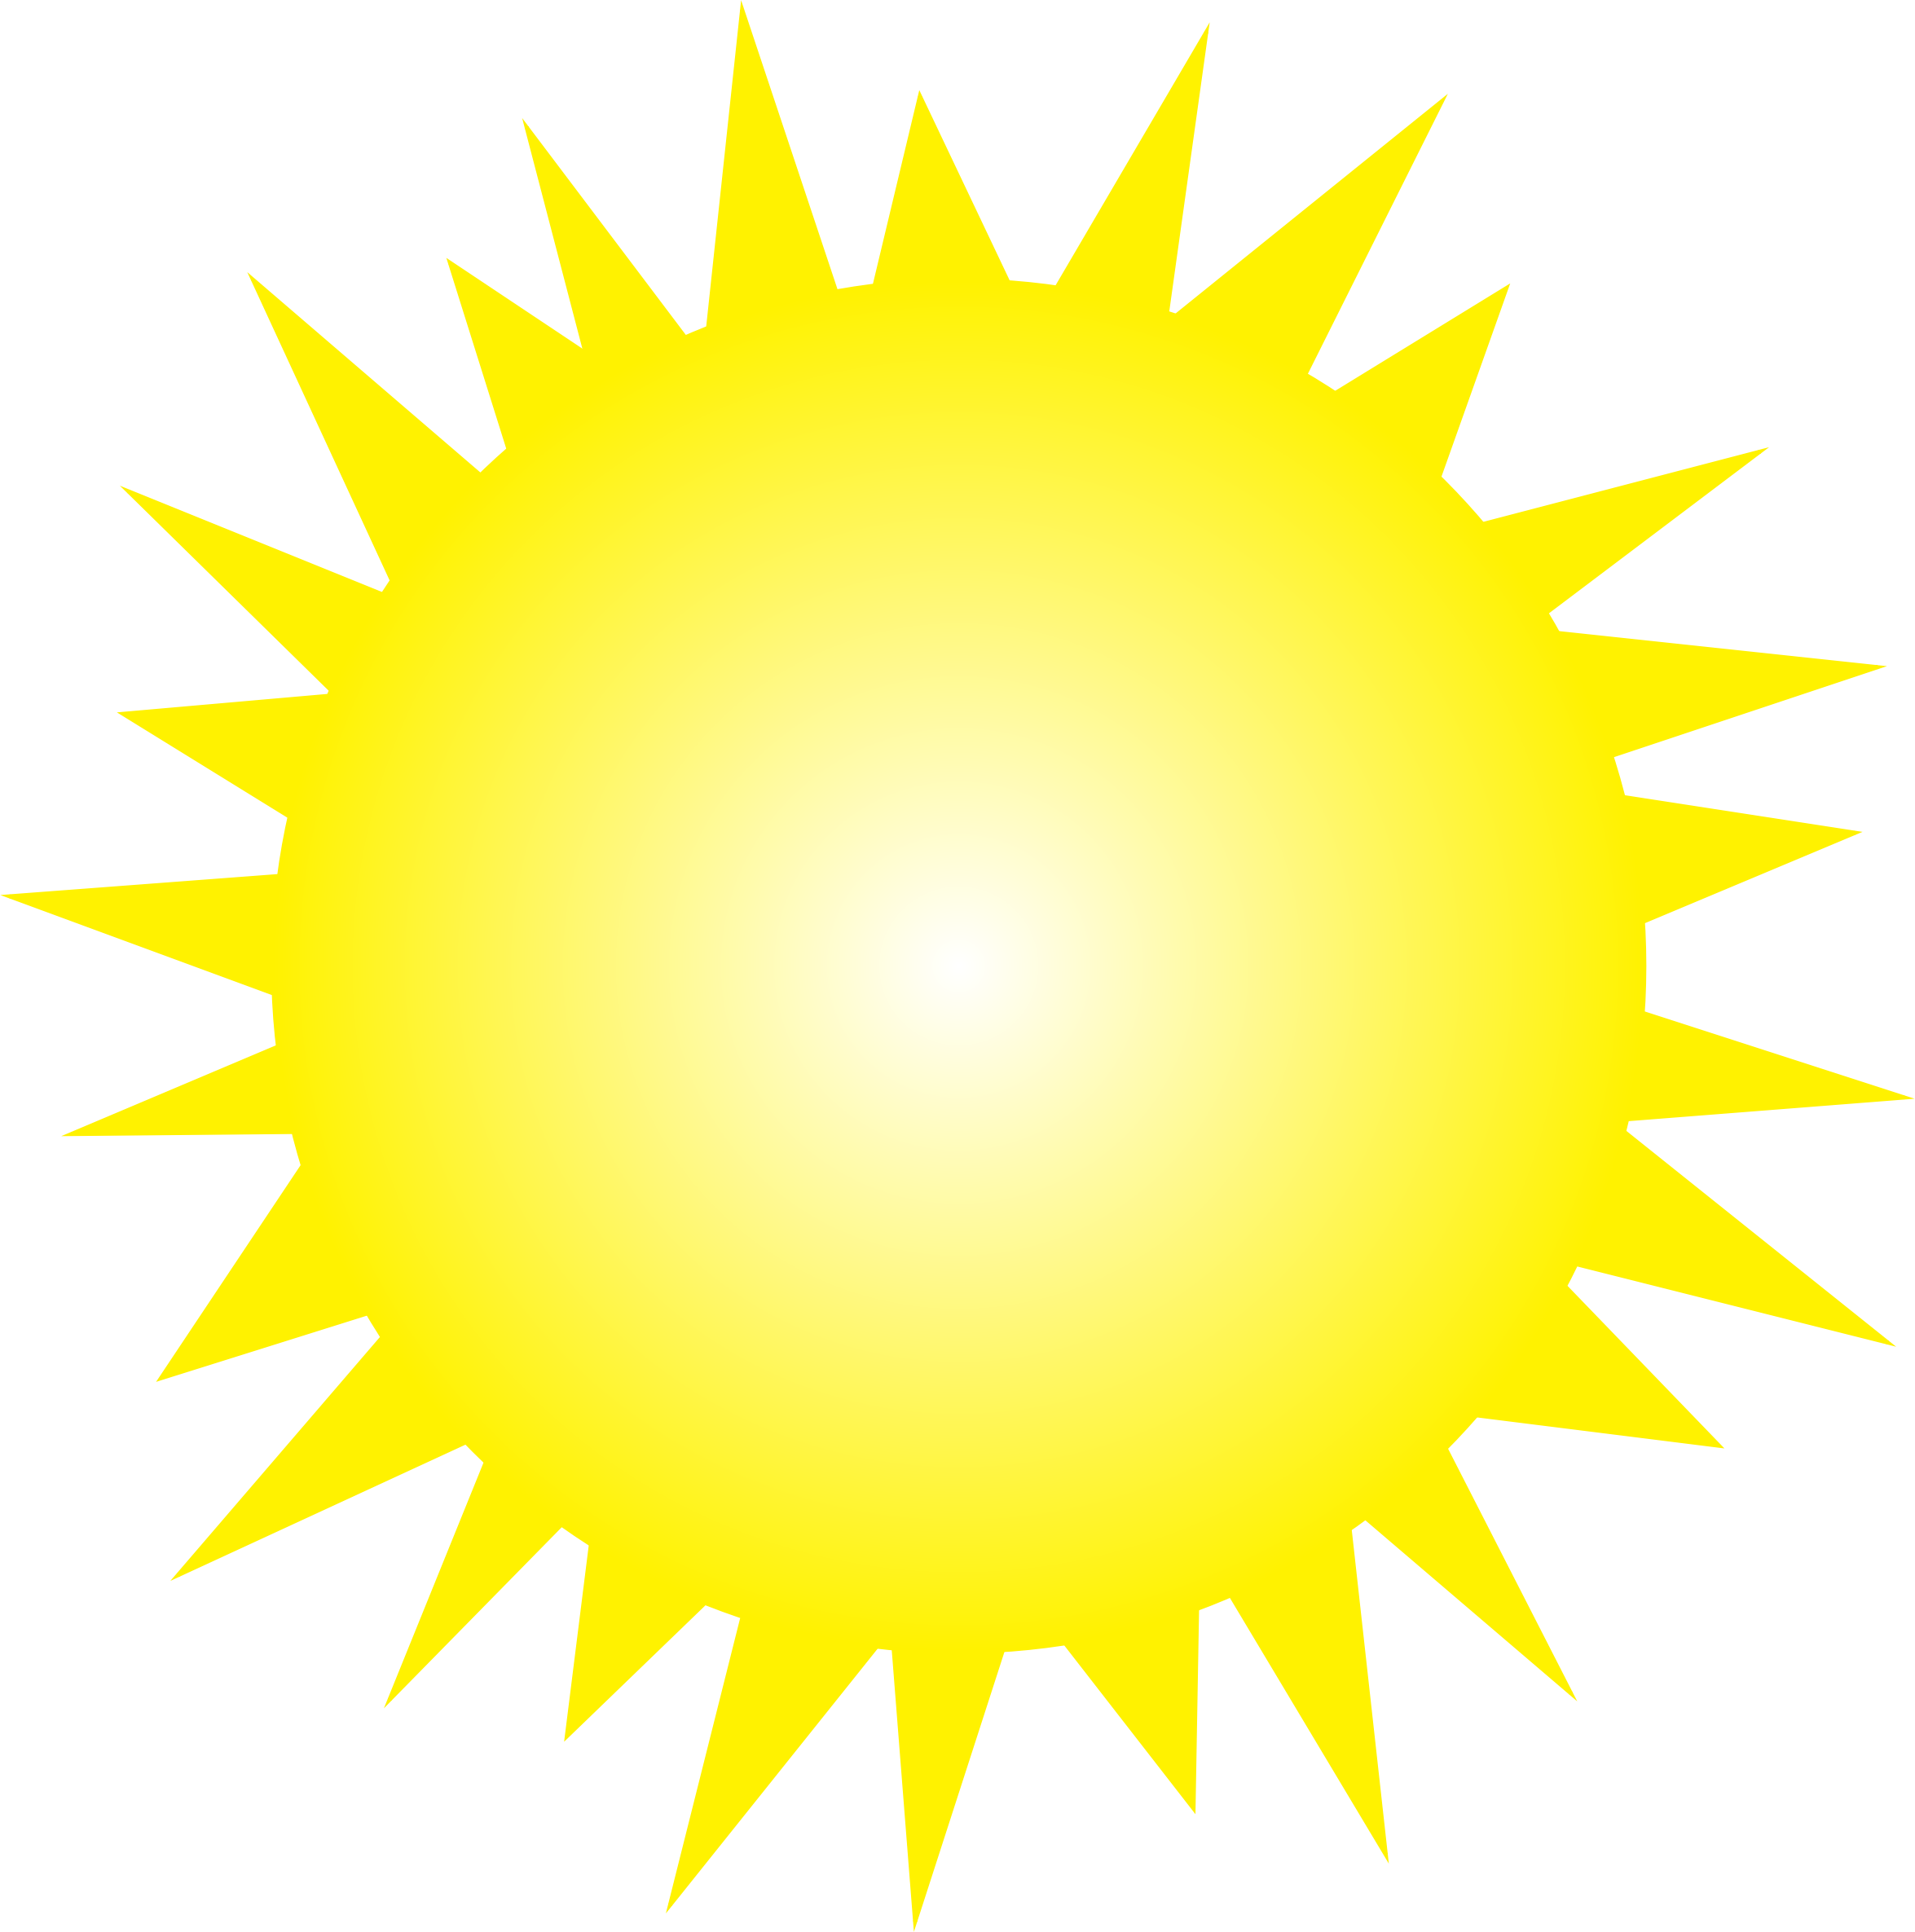 Simple Sun Motif PNG Clip art